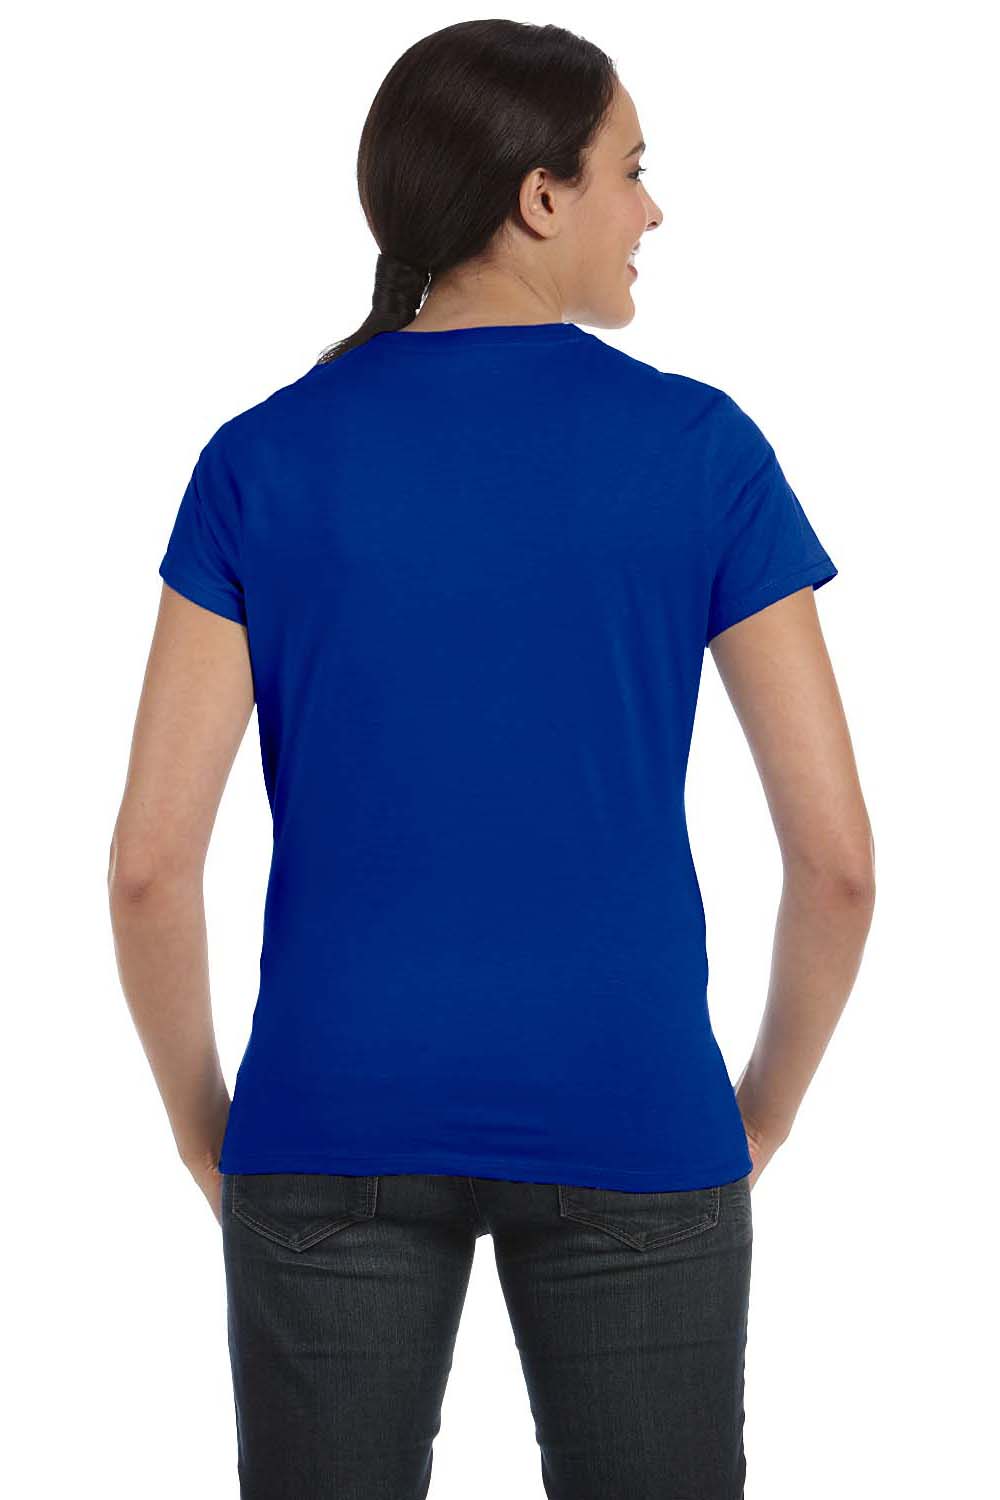 Hanes SL04 Womens Nano-T Short Sleeve Crewneck T-Shirt Royal Blue Back